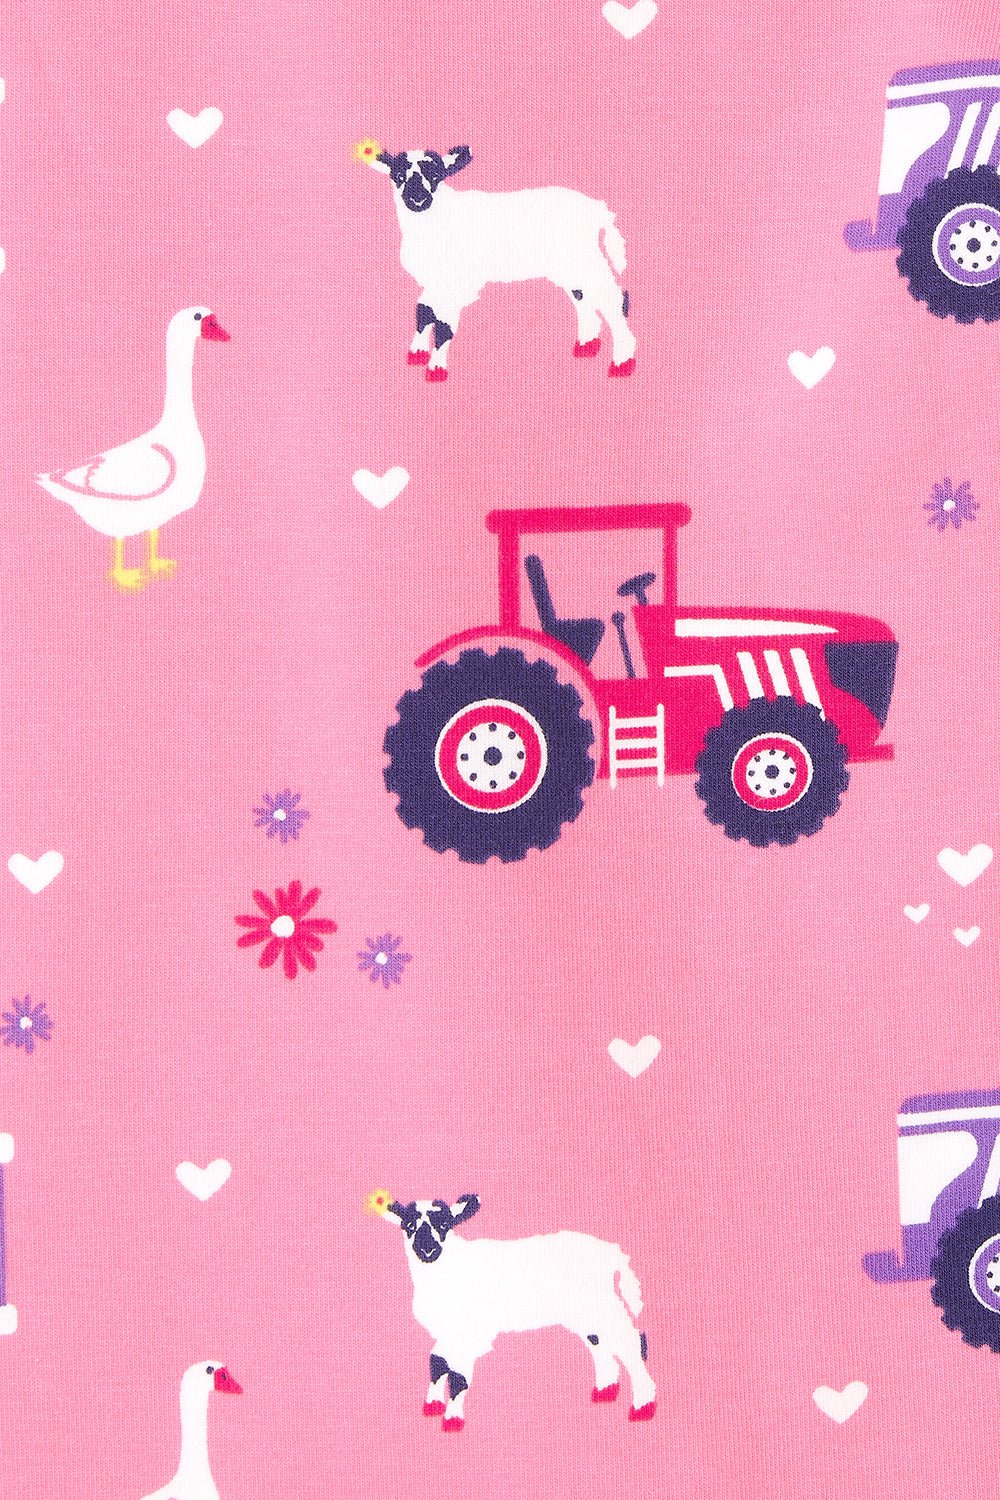 Pyjamas - Pink Purple Tractor Print